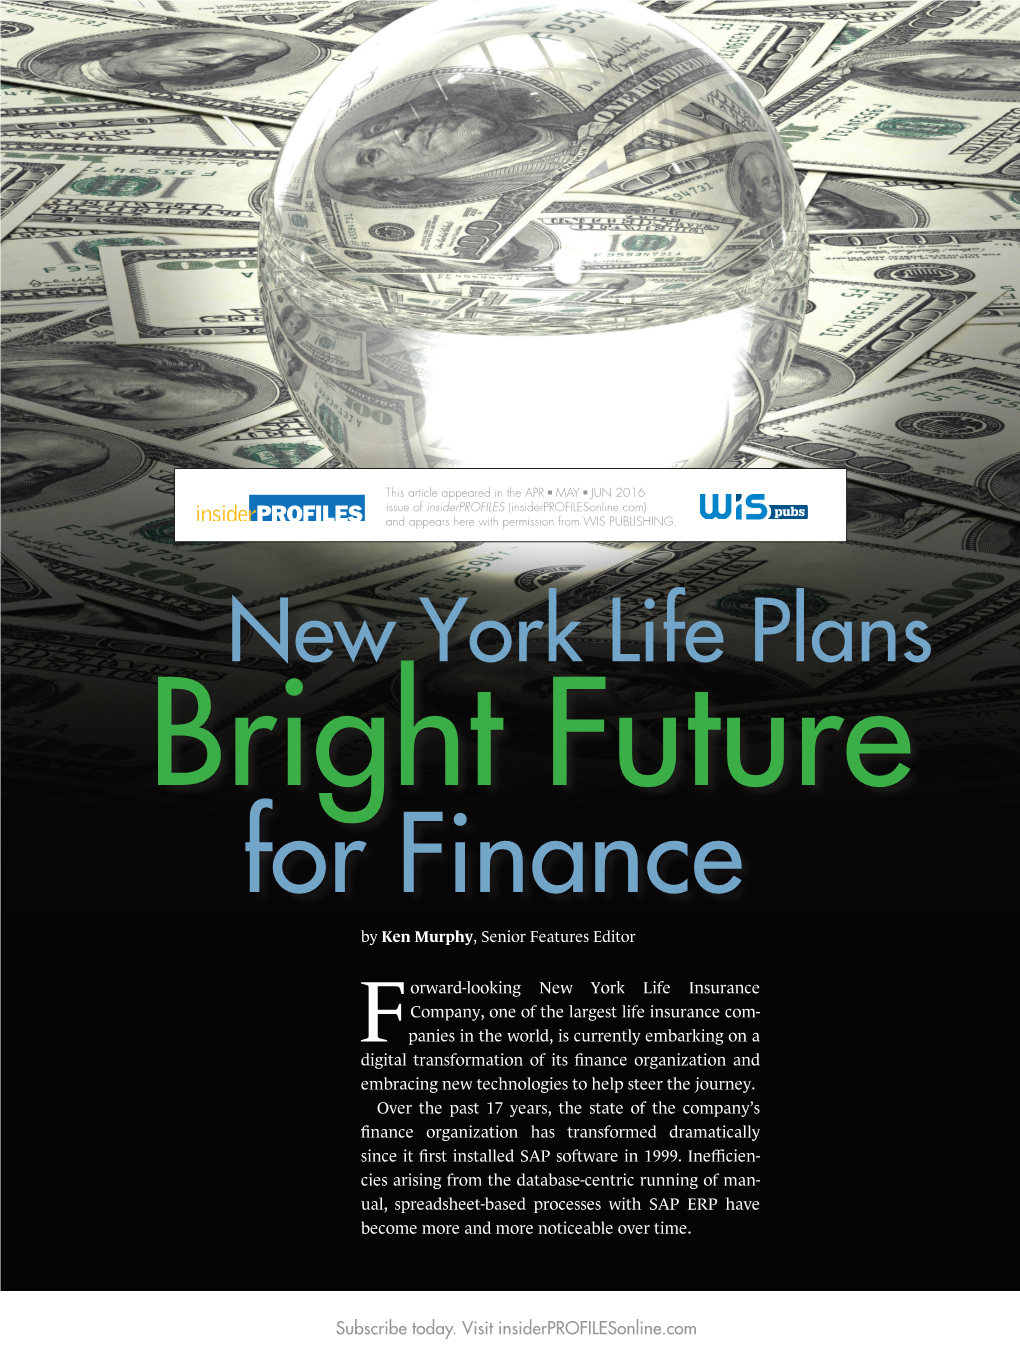 New York Life Bright Future for Finance